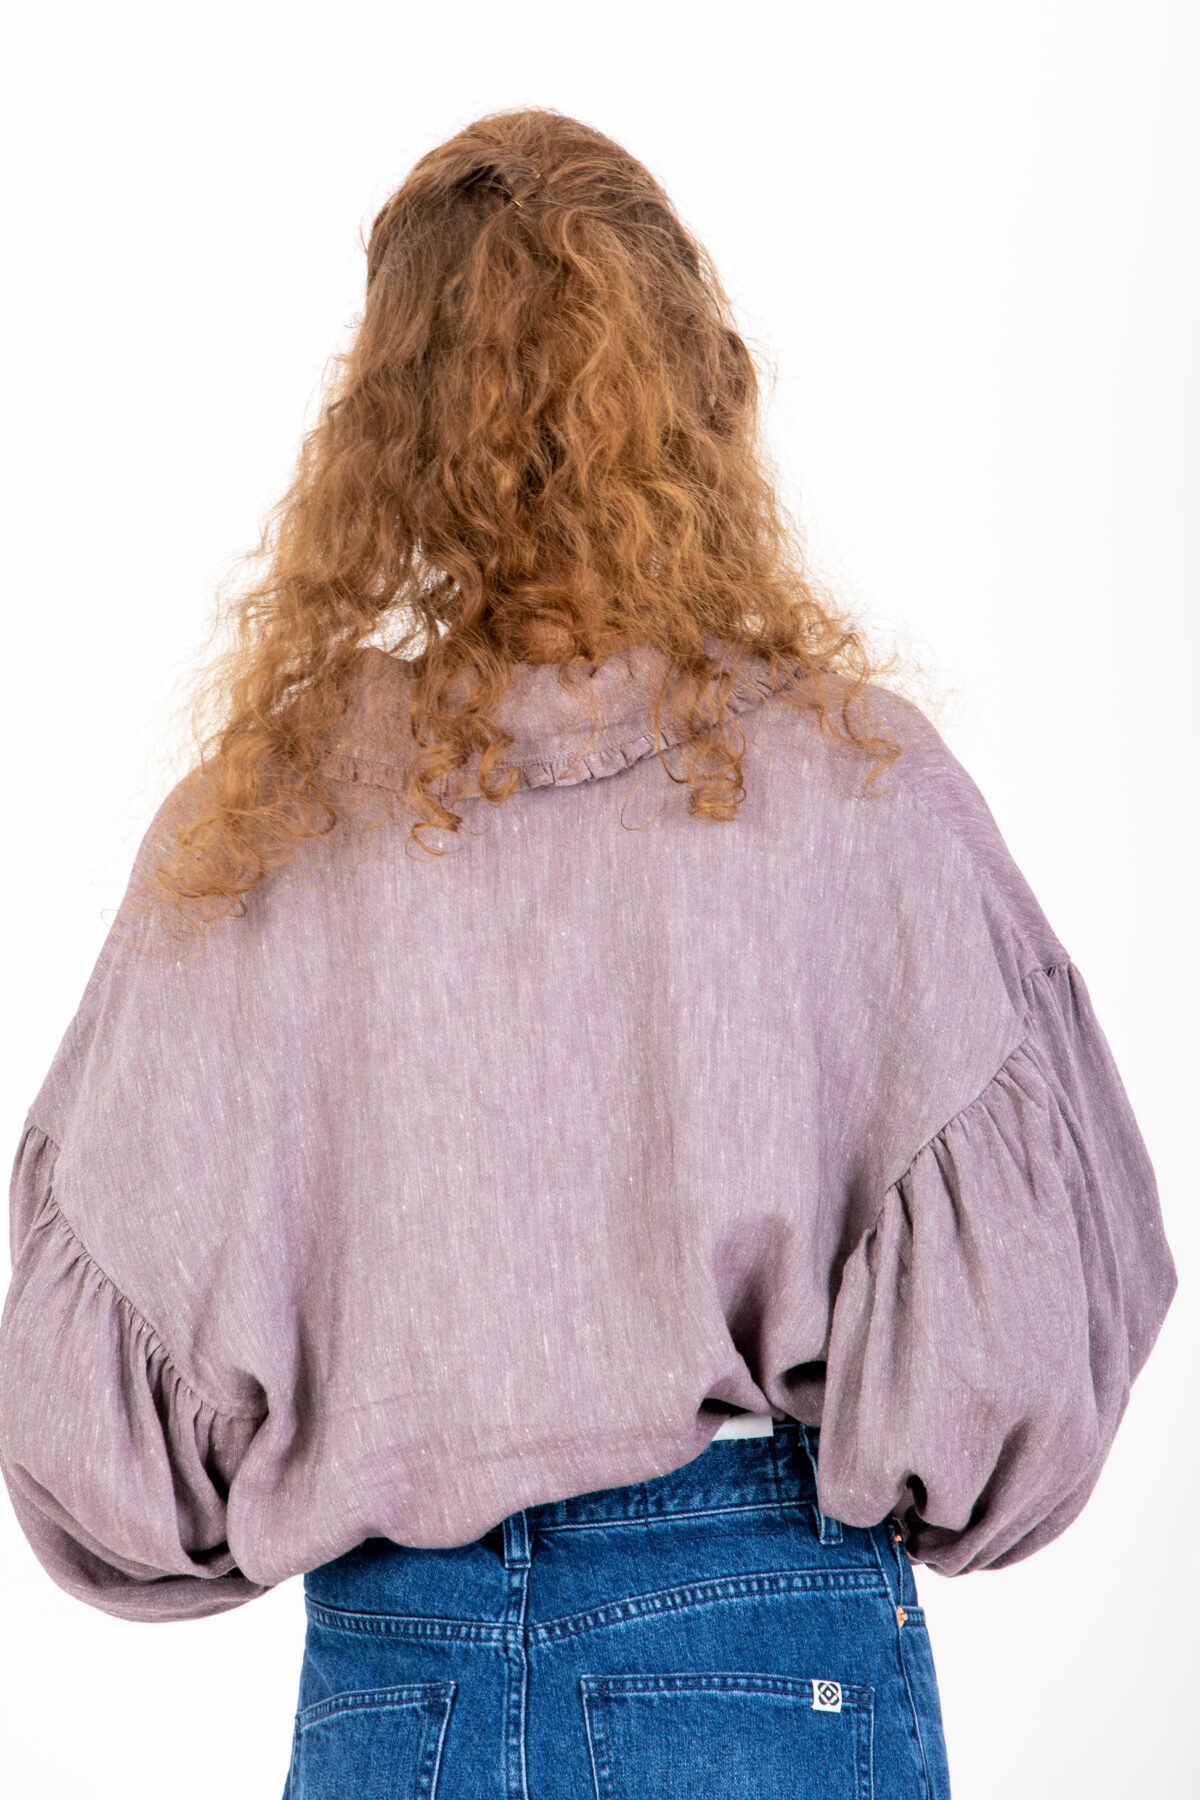 mediterraneo-blouse-purple-wide-collar-balloon-sleeves-sessun-matchboxathens